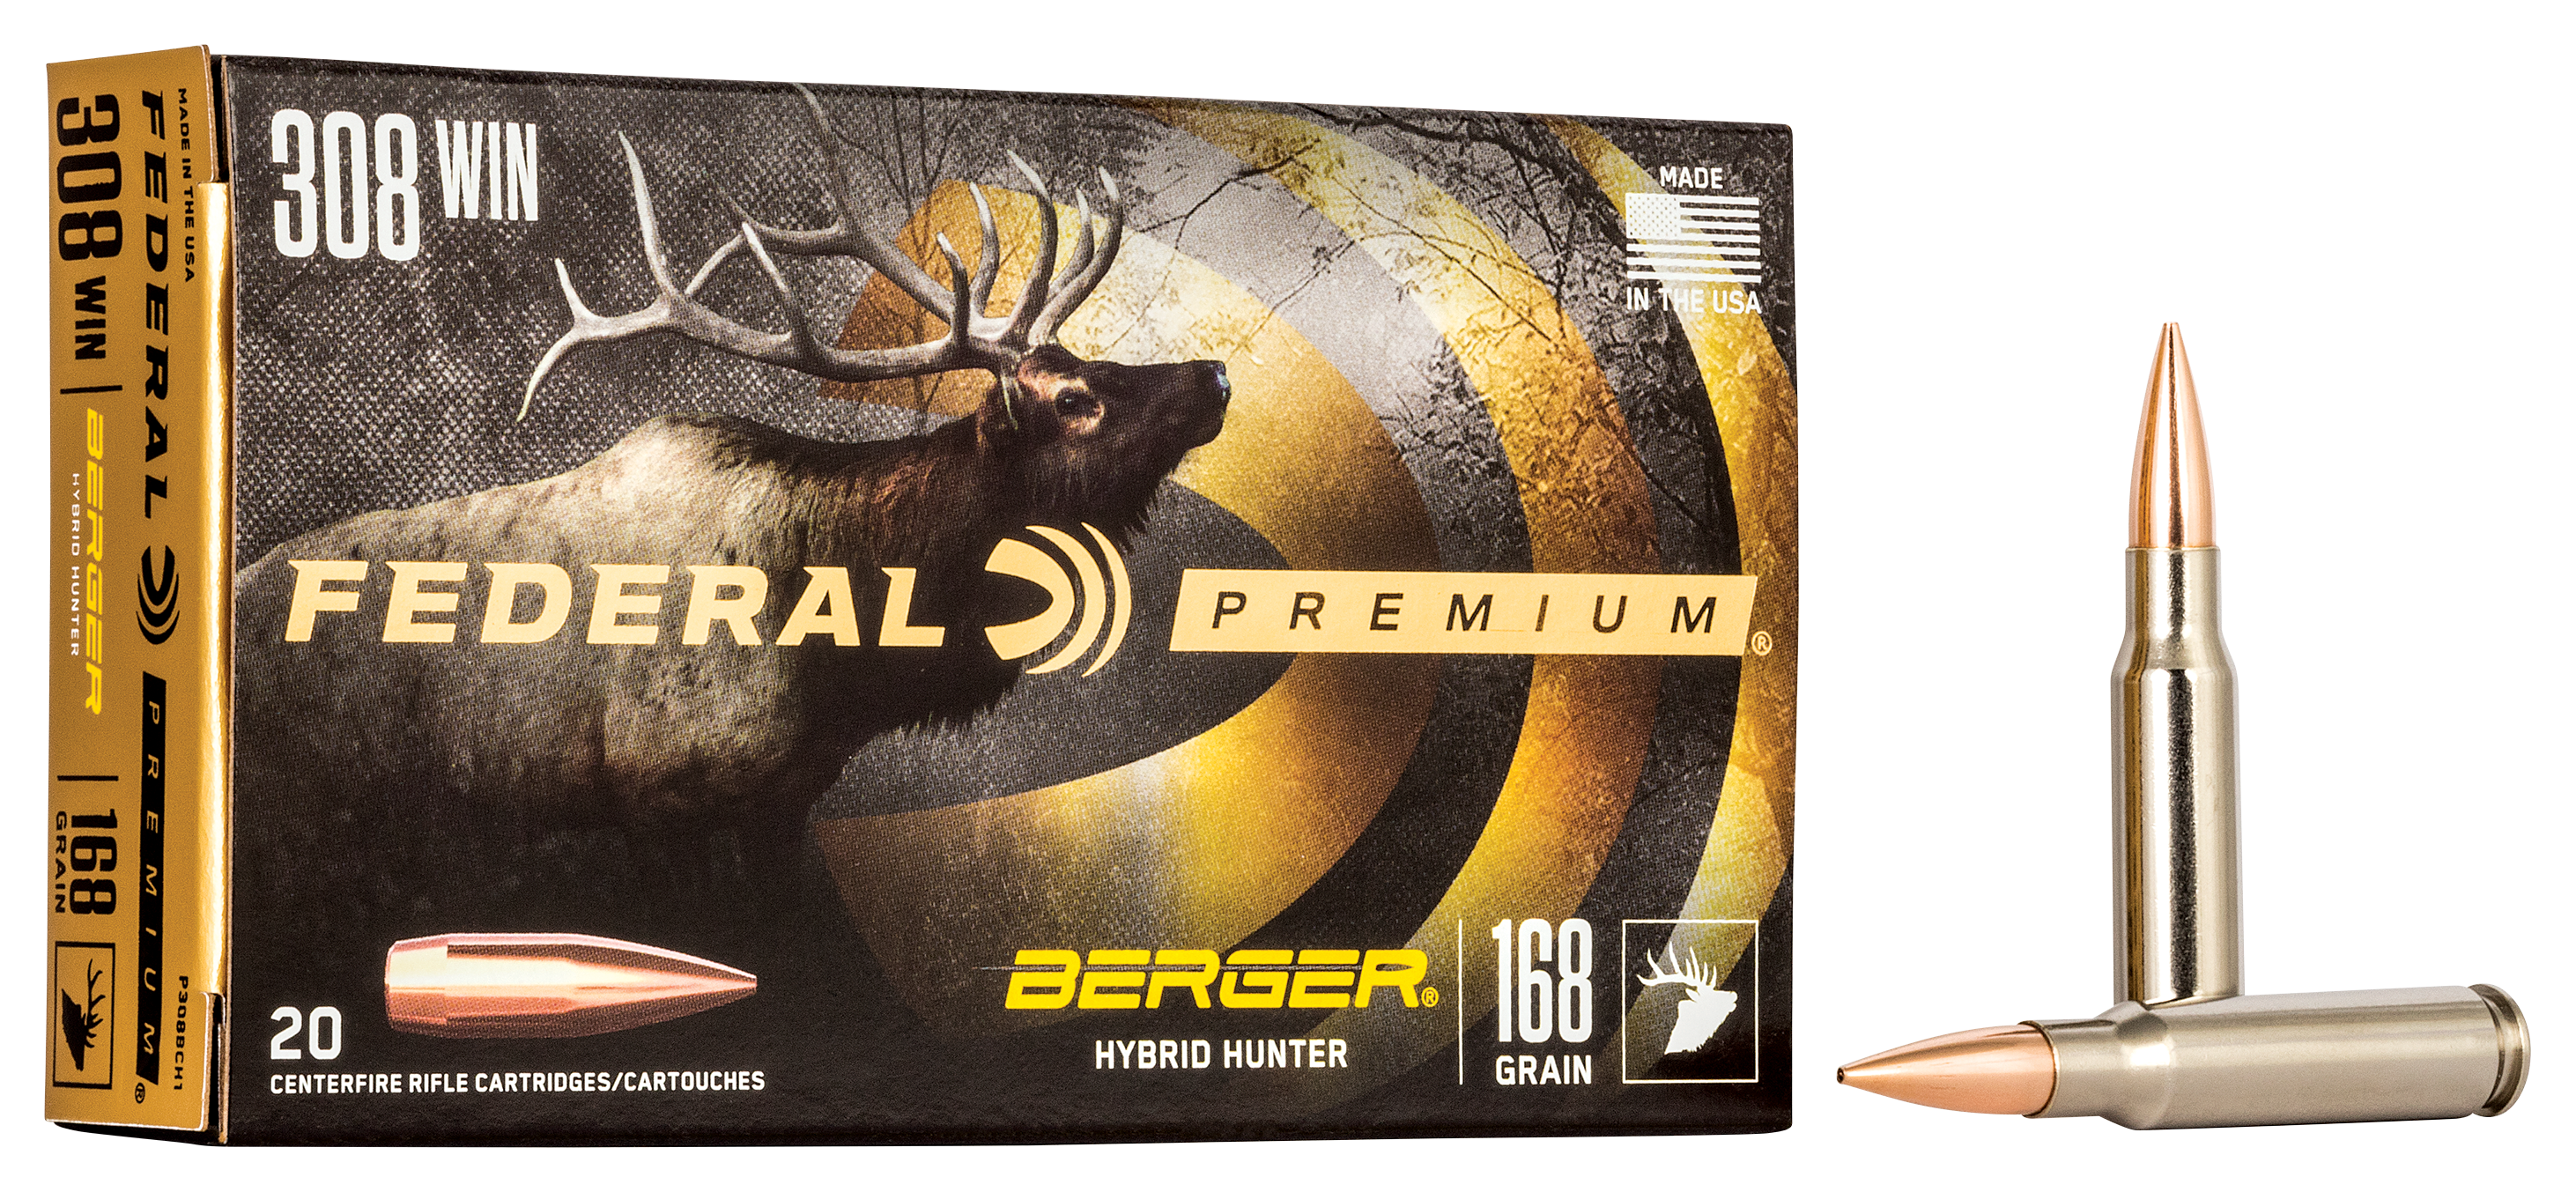 Federal Premium Berger Hybrid Hunter .308 Winchester 168 Grain Rifle Ammo